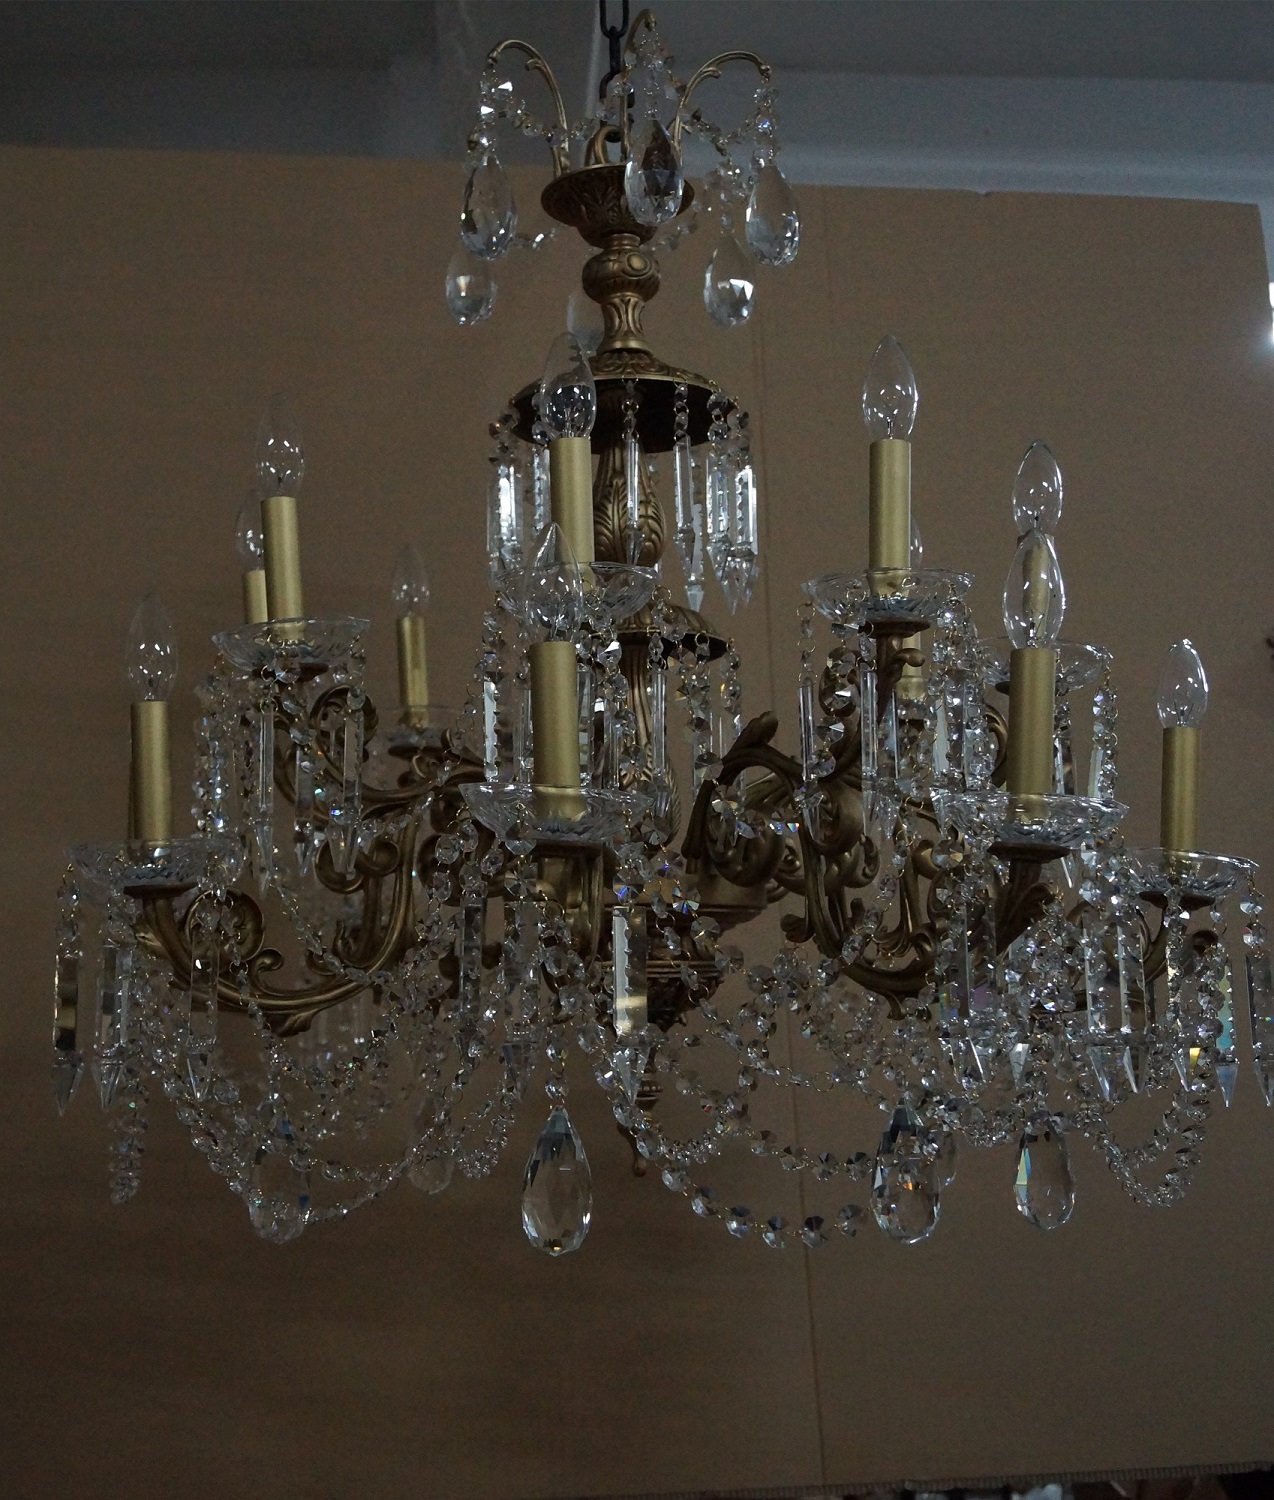 Hotel lobby crystal pendant chandelier(MD0743-16)